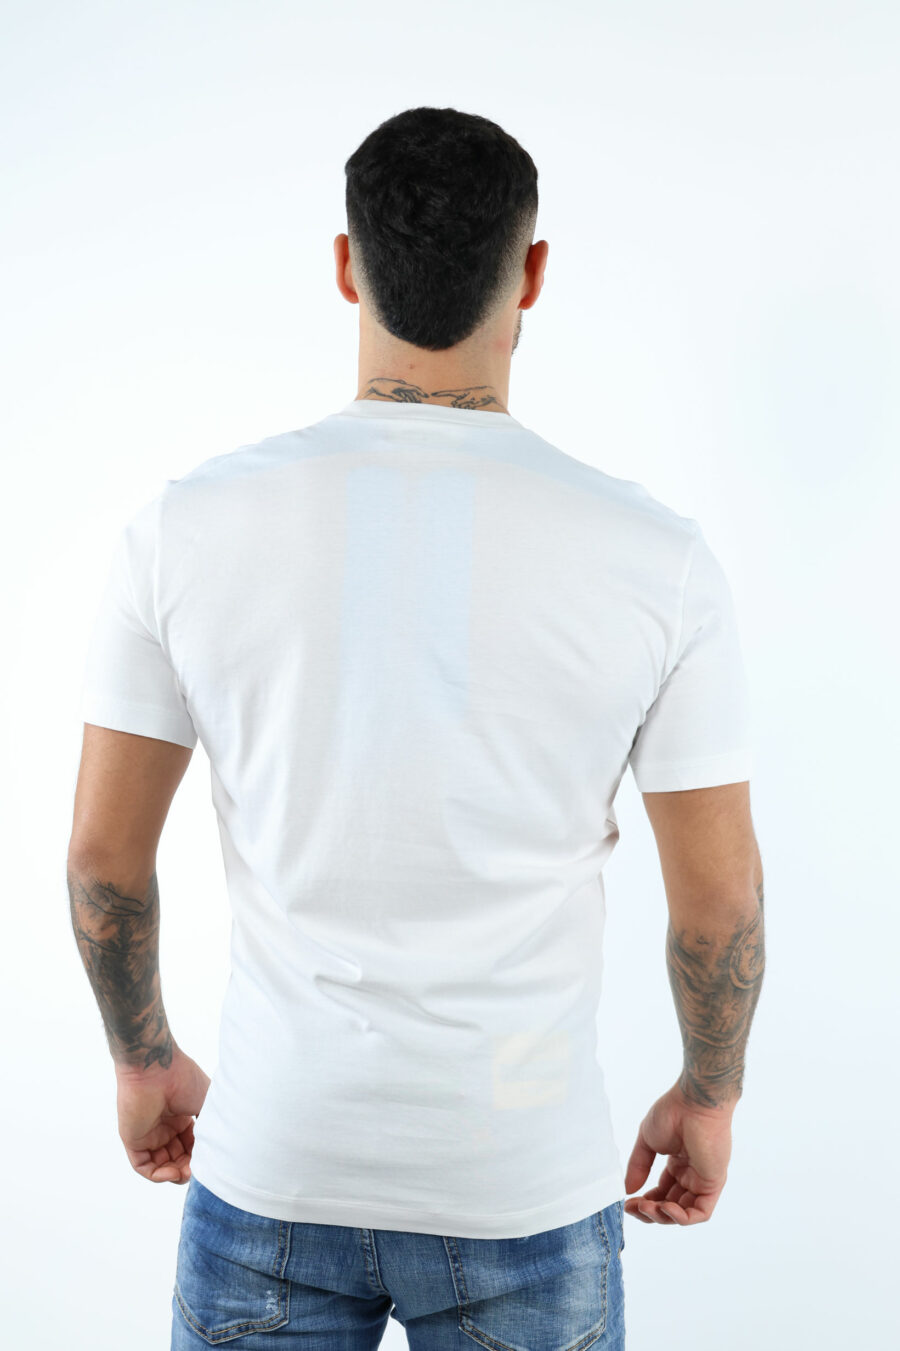 T-shirt branca com minilogo "suburbans" preto - 106626